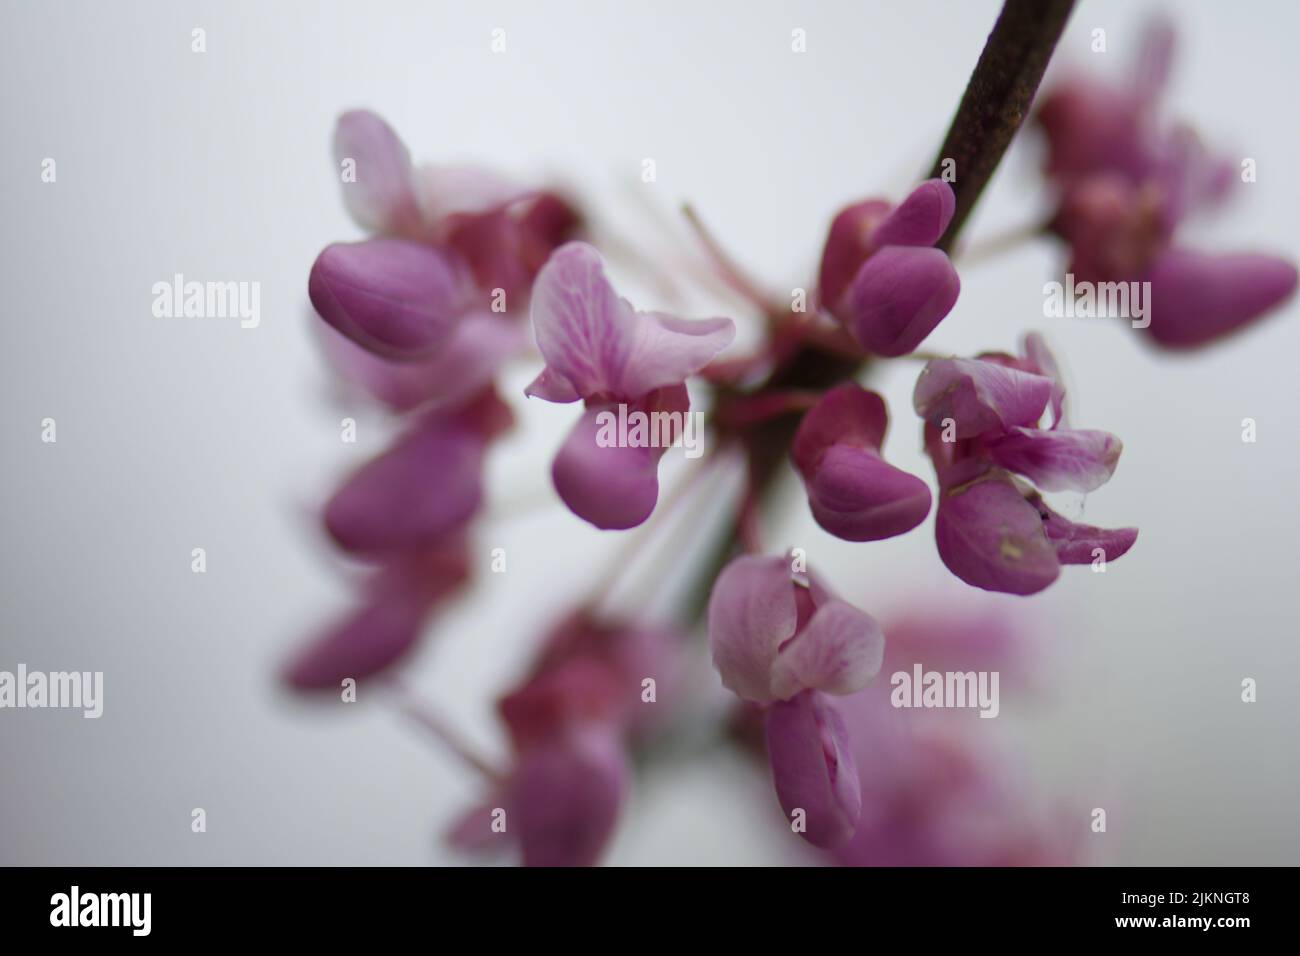 A beautiful shot of an eastern redbud tree flowers Stock Photo